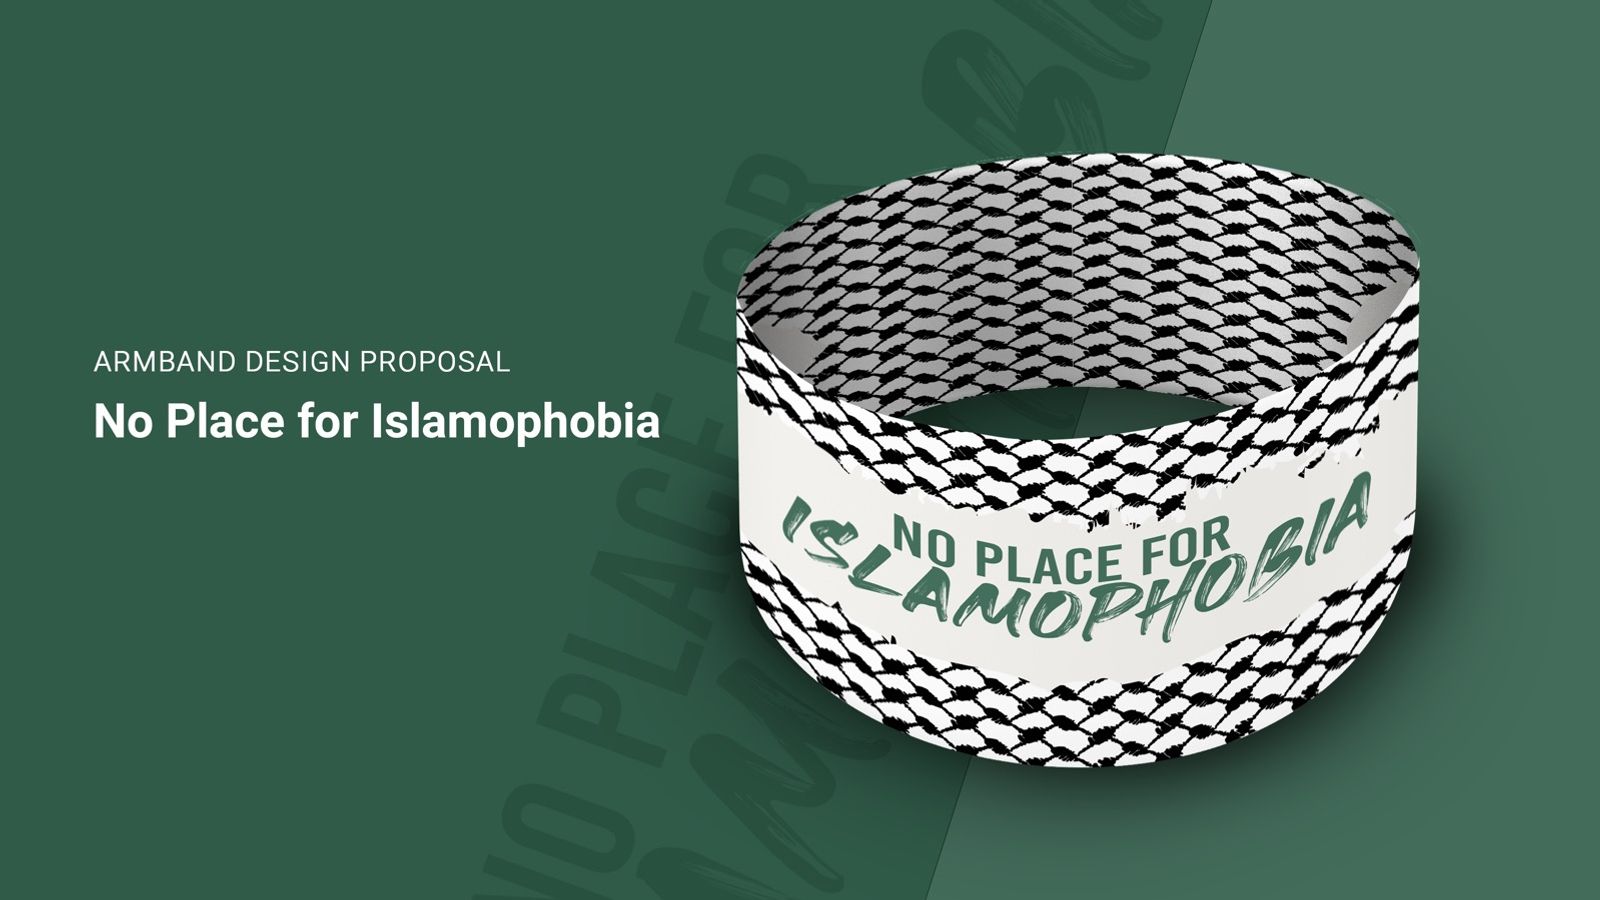 Muslim nations proposed World Cup armband to raise awareness of Islamophobia